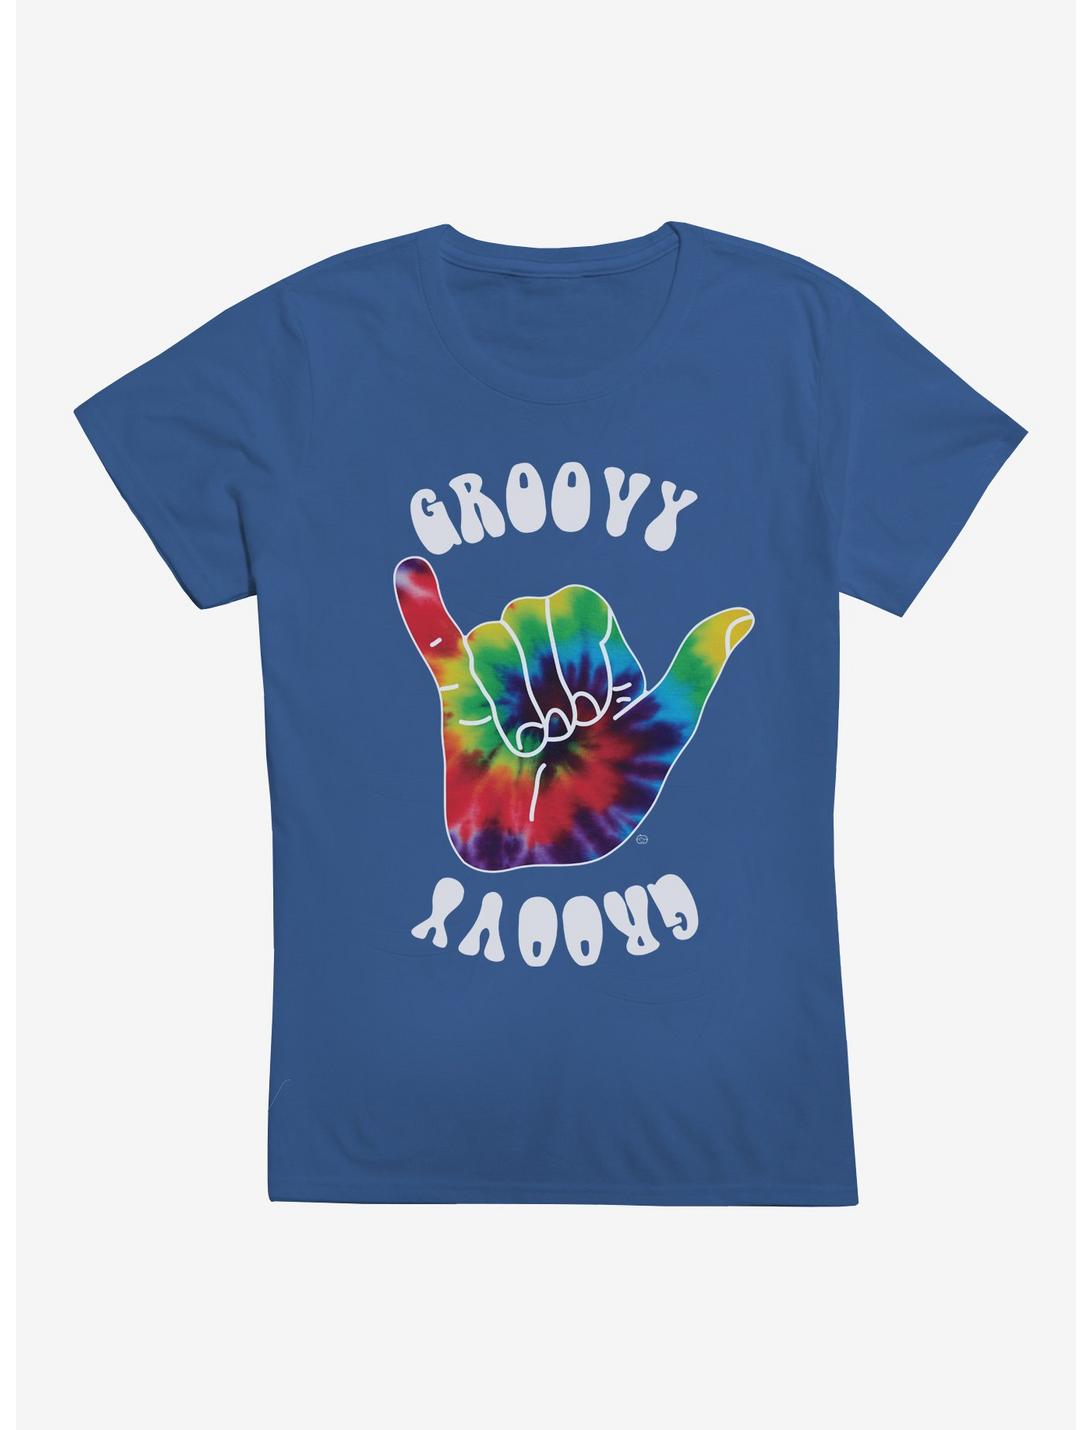 Groovy Hand Tie Dye Girls T-Shirt, ROYAL, hi-res